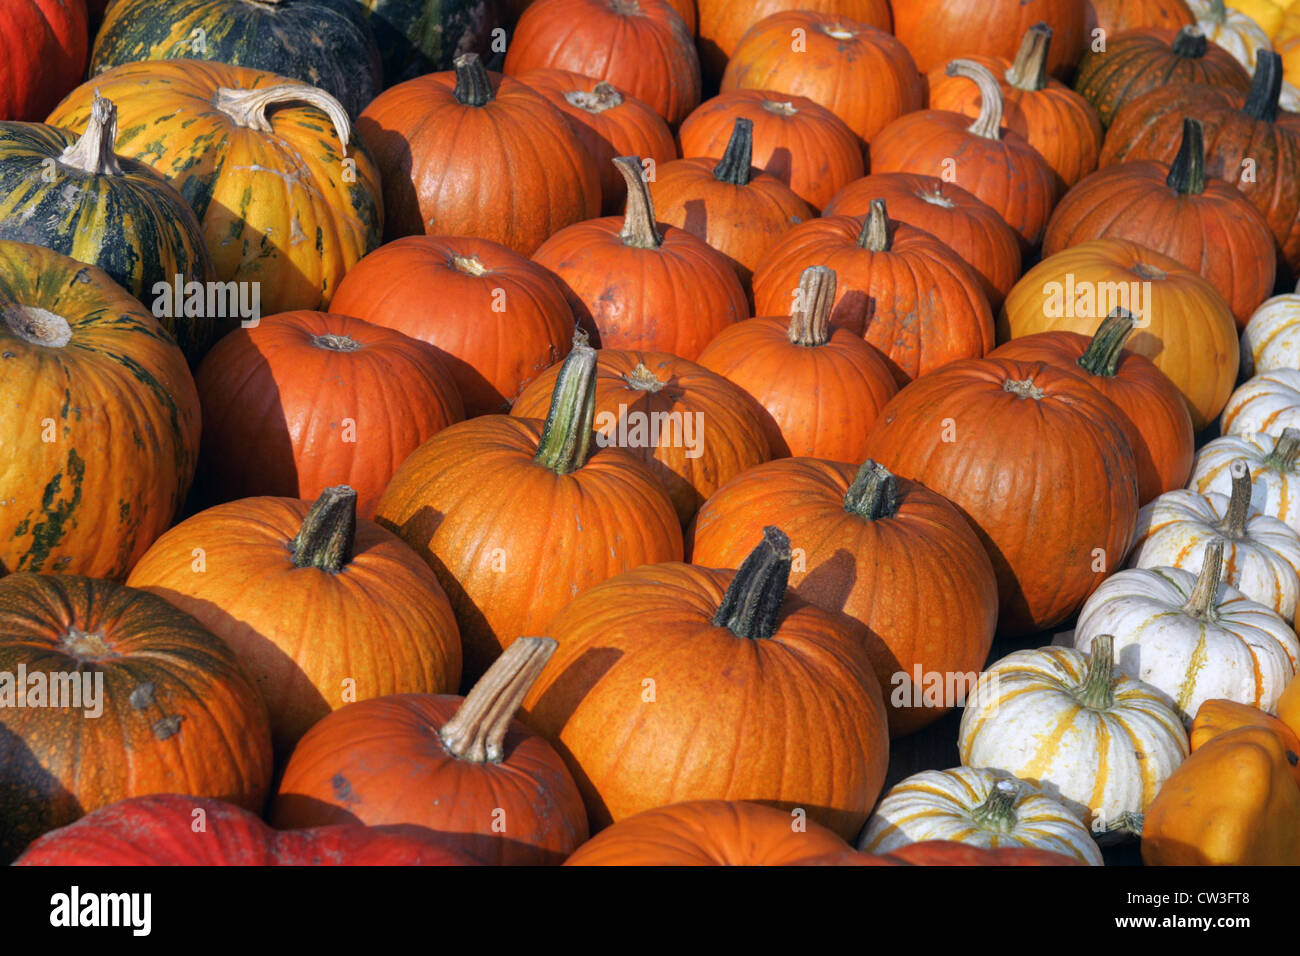 Berlin, arranged decorative pumpkins Stock Photo